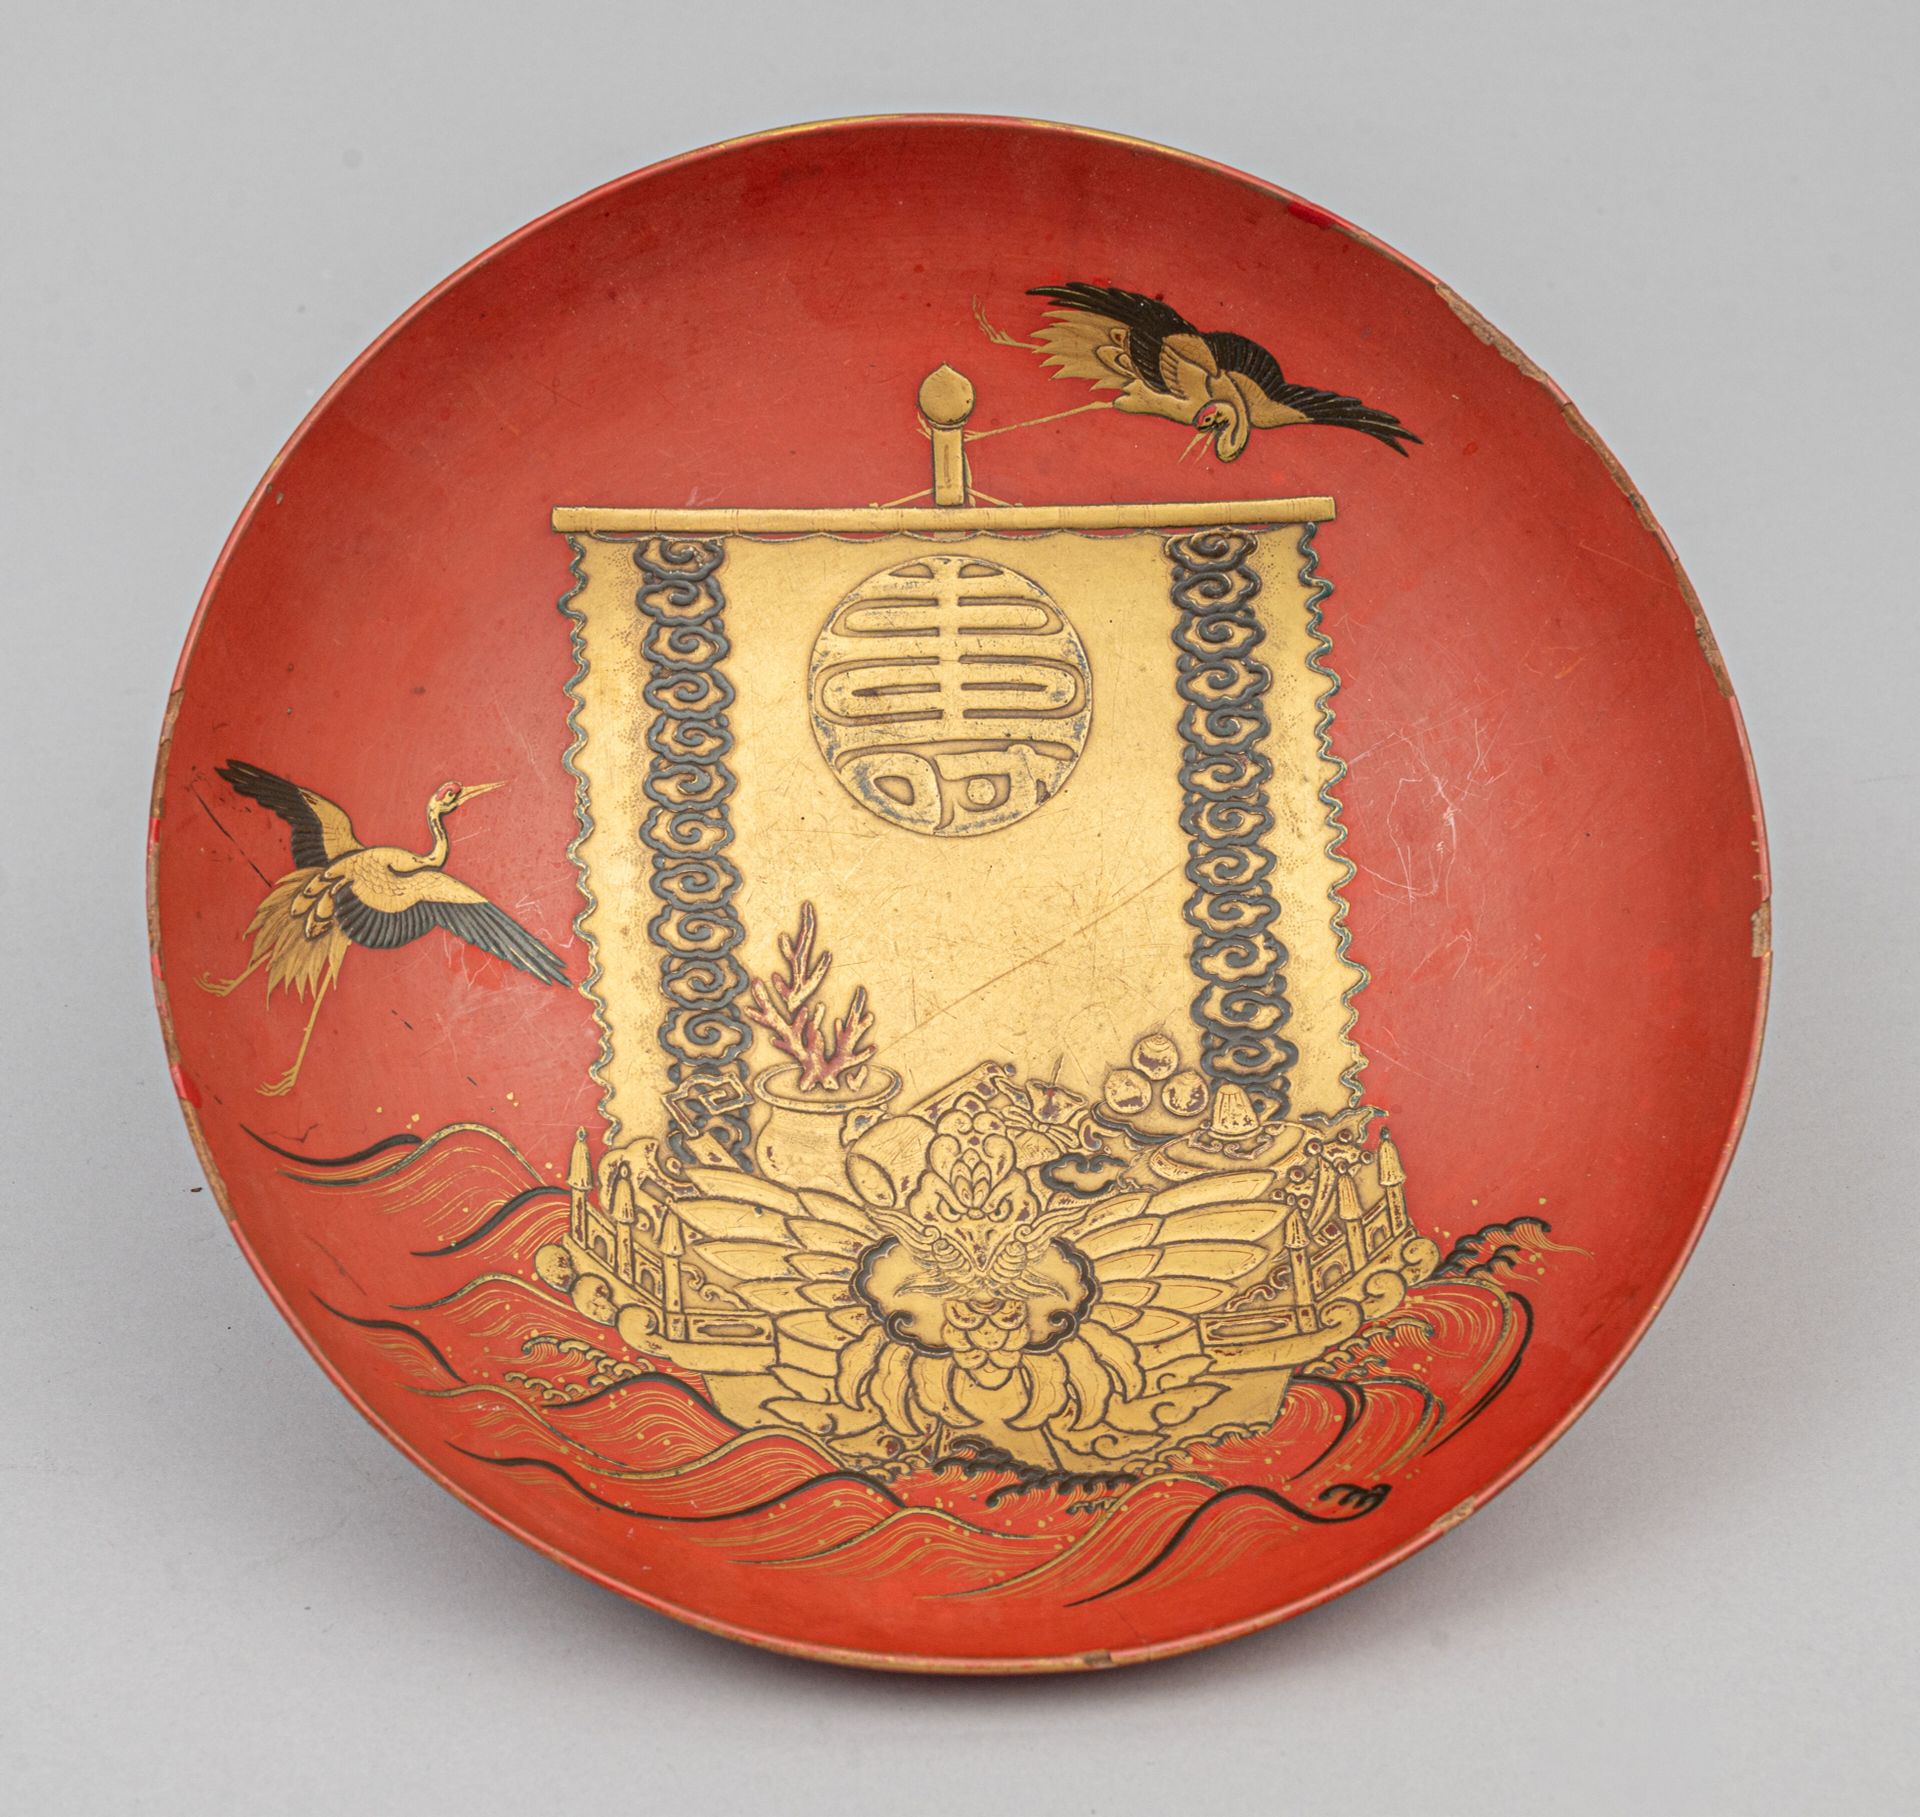 Null 莳绘漆碗，日本，明治时期（1868-1912 年）
红底黑色和金色装饰，背景描绘了装满七福神各自属性的高原船，船帆上有一个巨大的 "寿 "字，在波浪中&hellip;